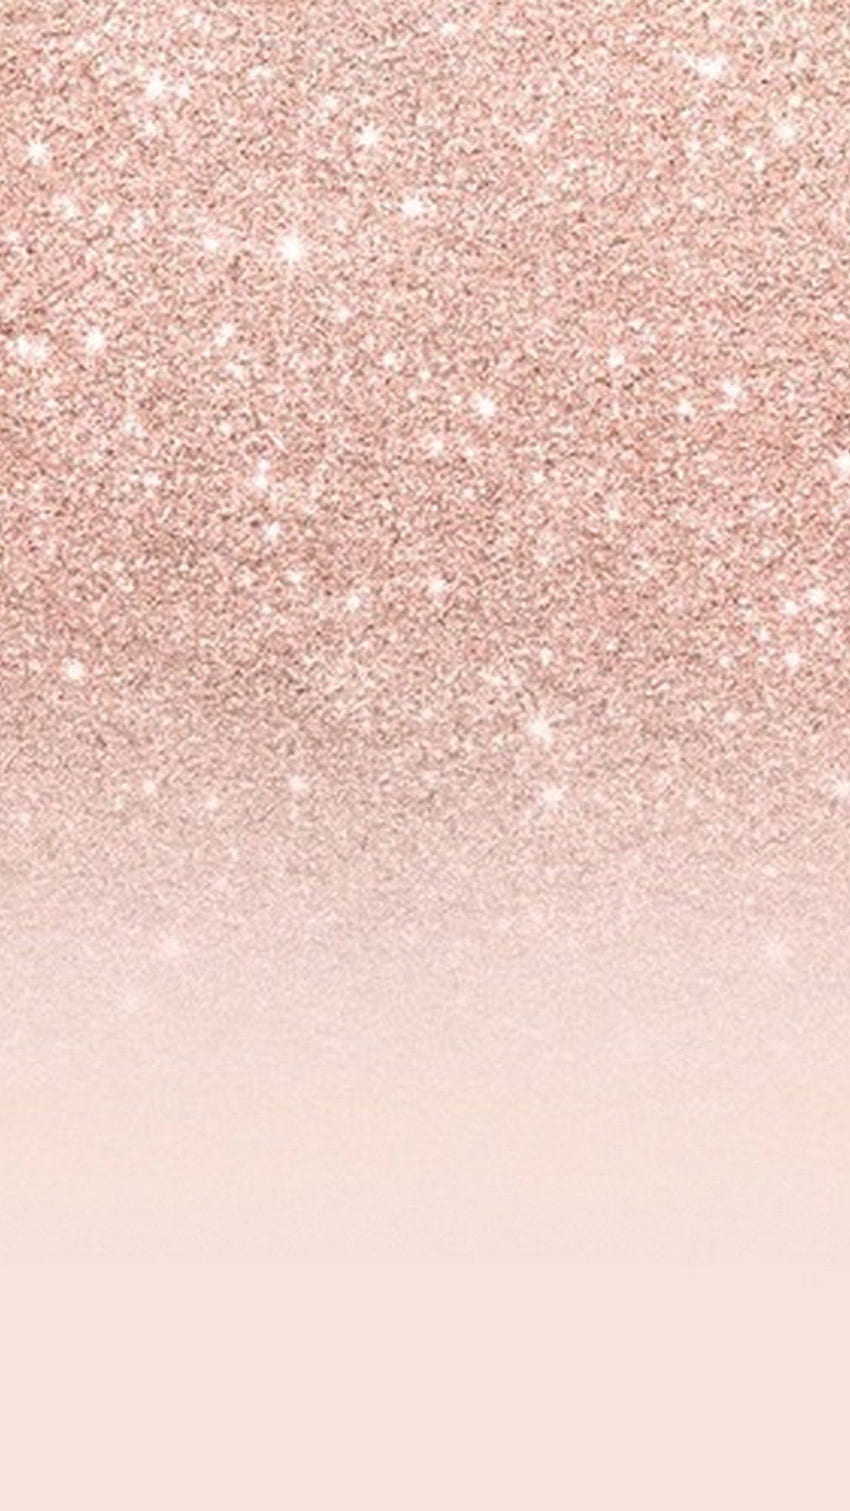 Top Imagen High Resolution Pink Marble Background Thpthoangvanthu